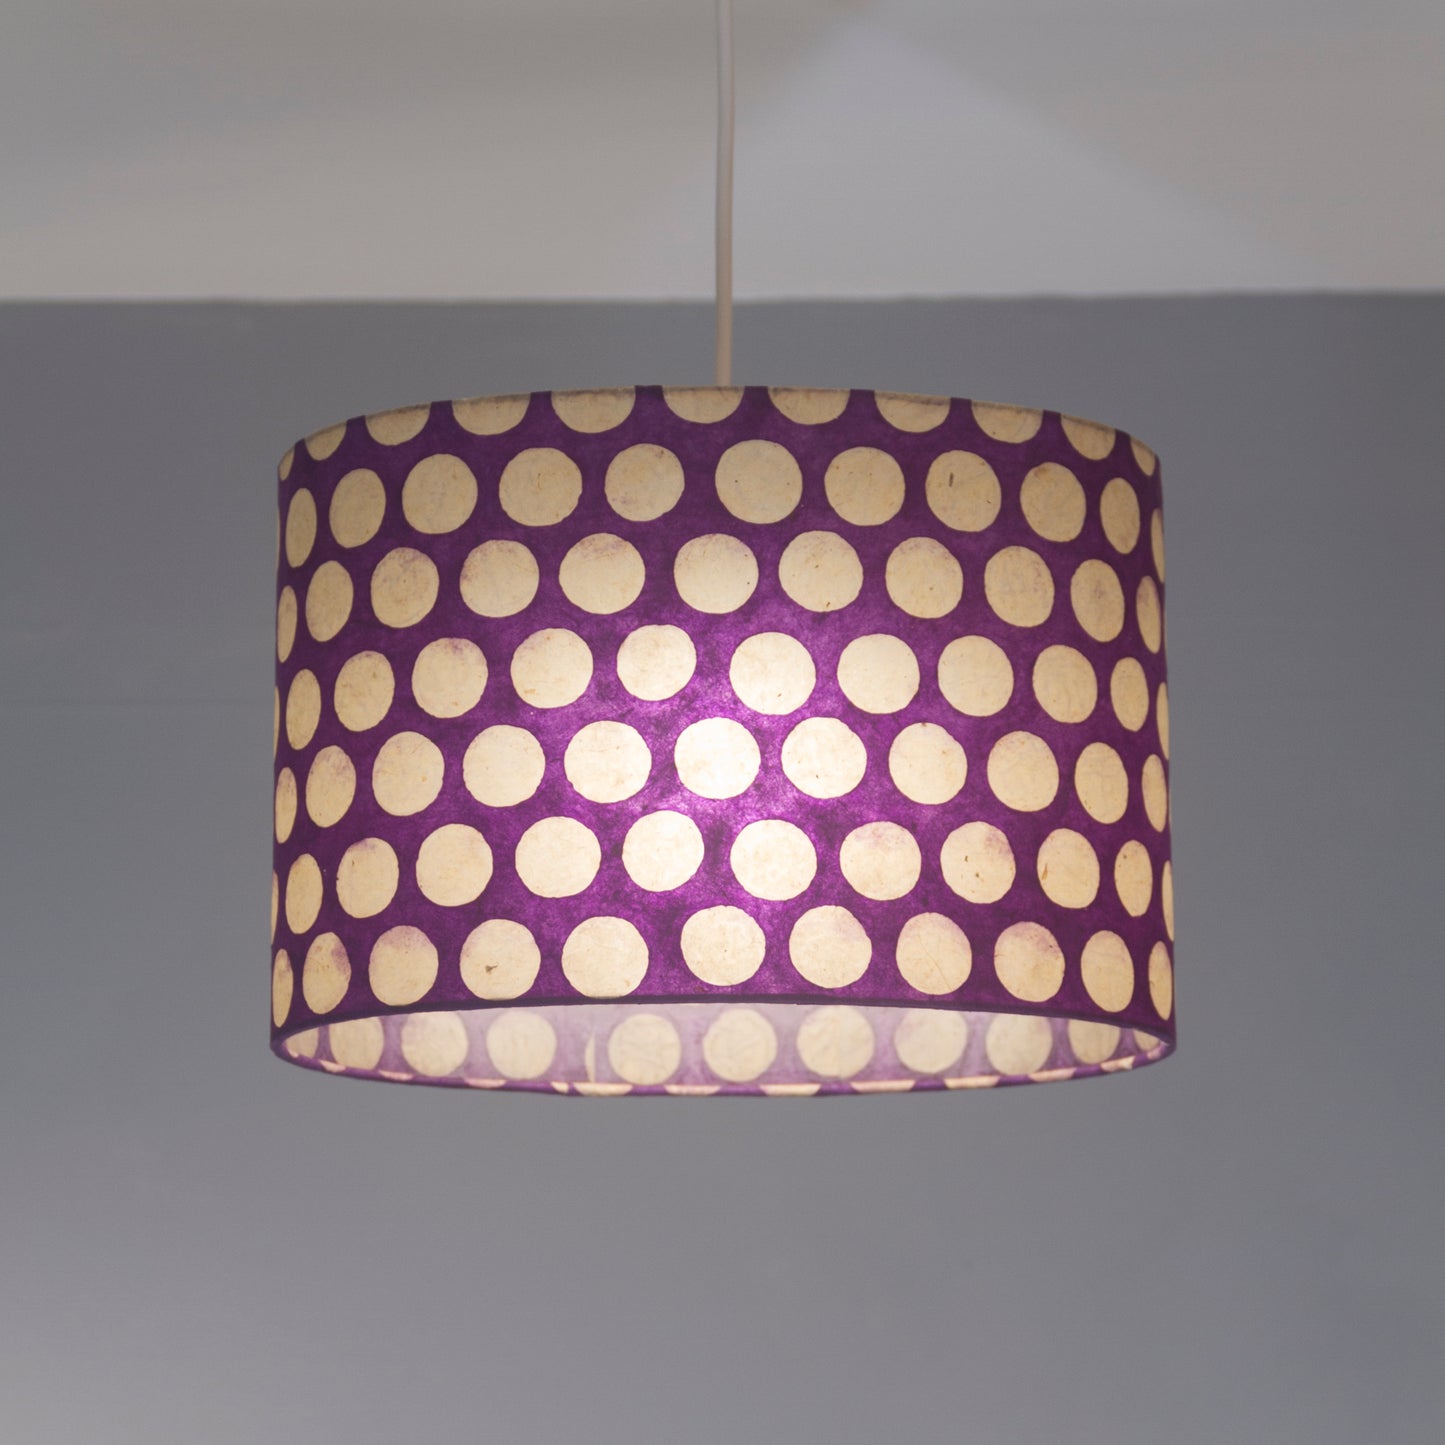 Conical Lamp Shade P79 - Batik Dots on Purple, 15cm(top) x 30cm(bottom) x 22cm(height)